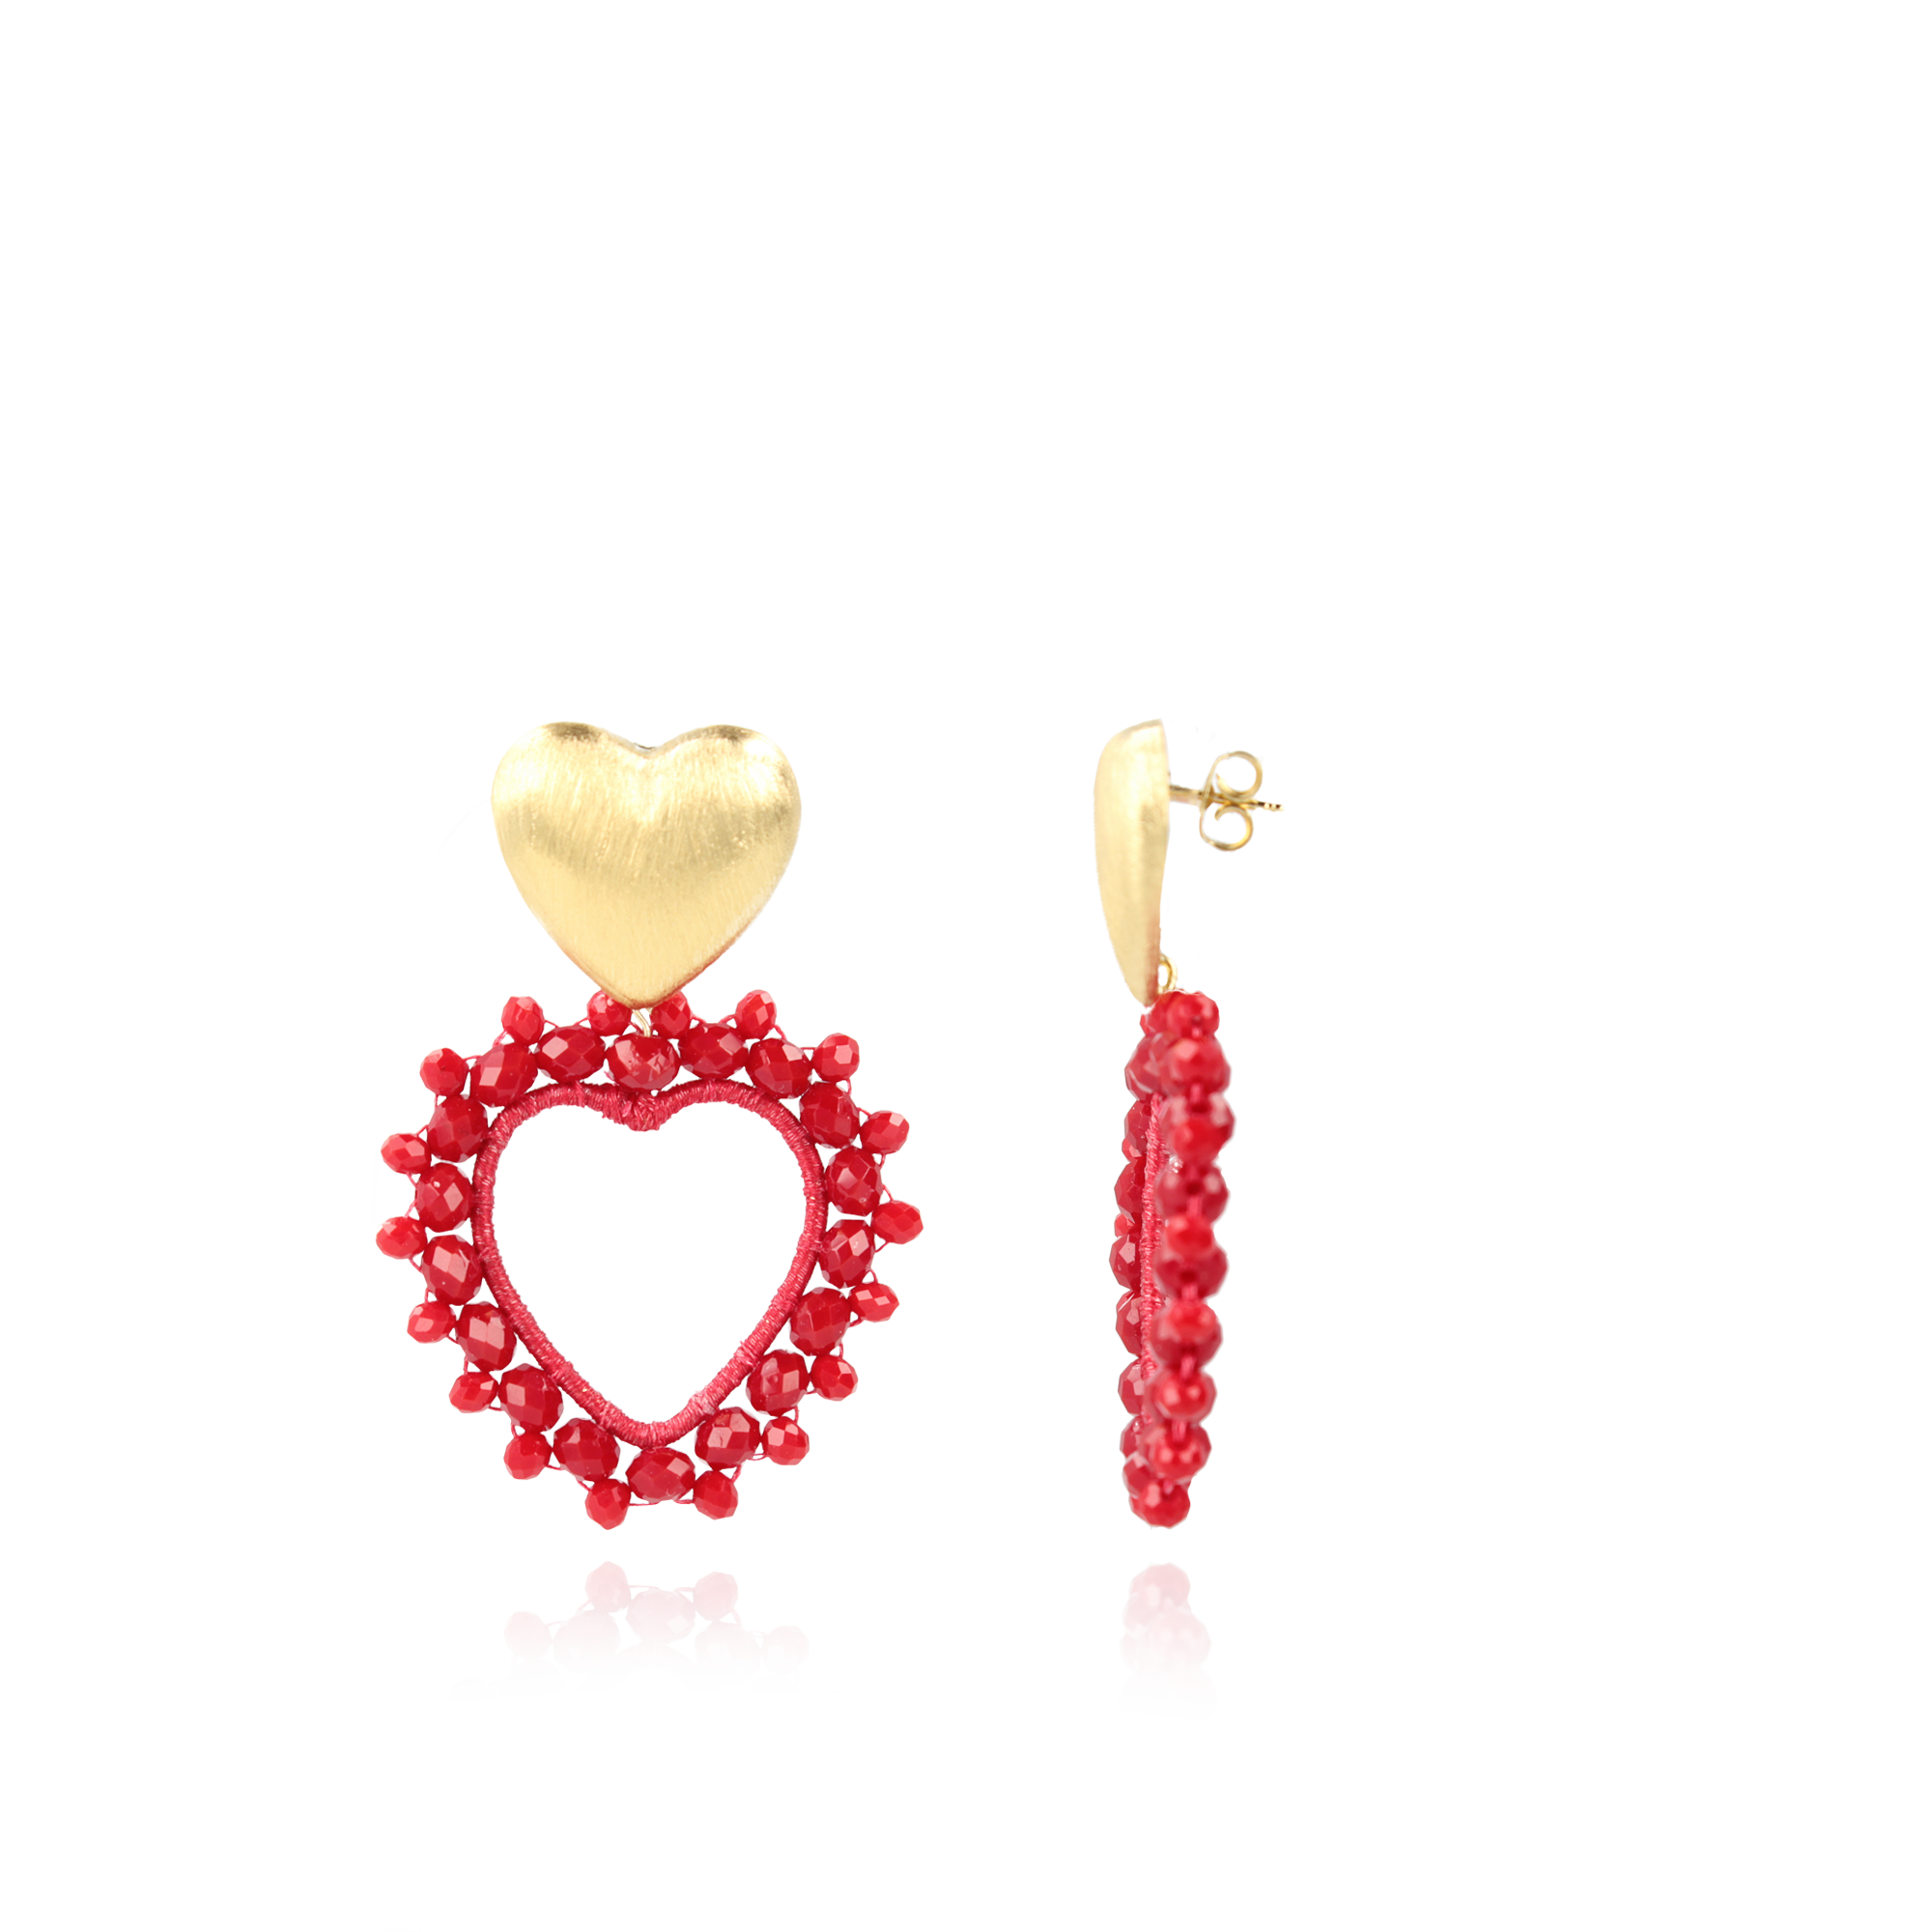 Red Heart Earrings Novi Slott-theme.productDescriptionPage.SEO.byTheBrand